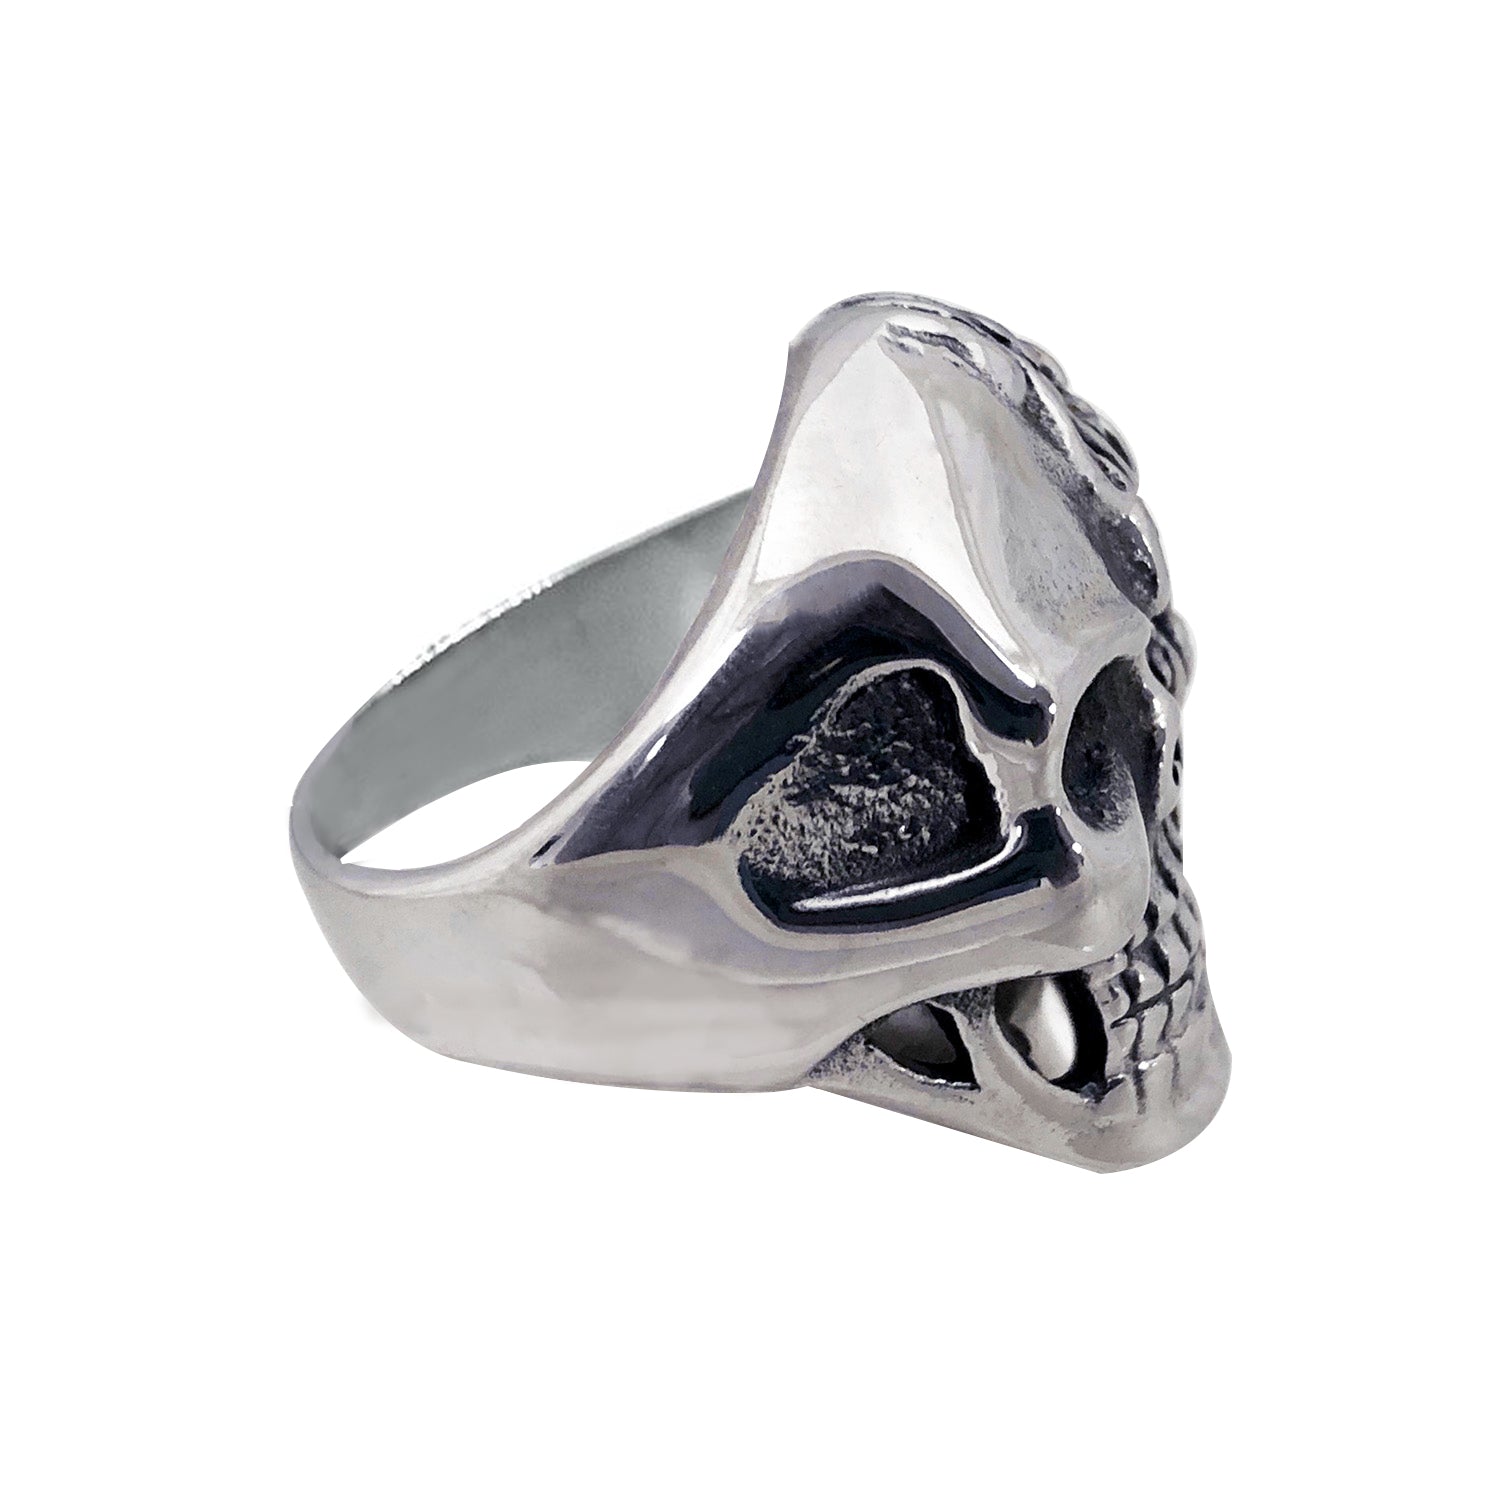 Seven Seas Pirates Flaming Skull Steel Black Enameled Ring (US Size 9 R176)